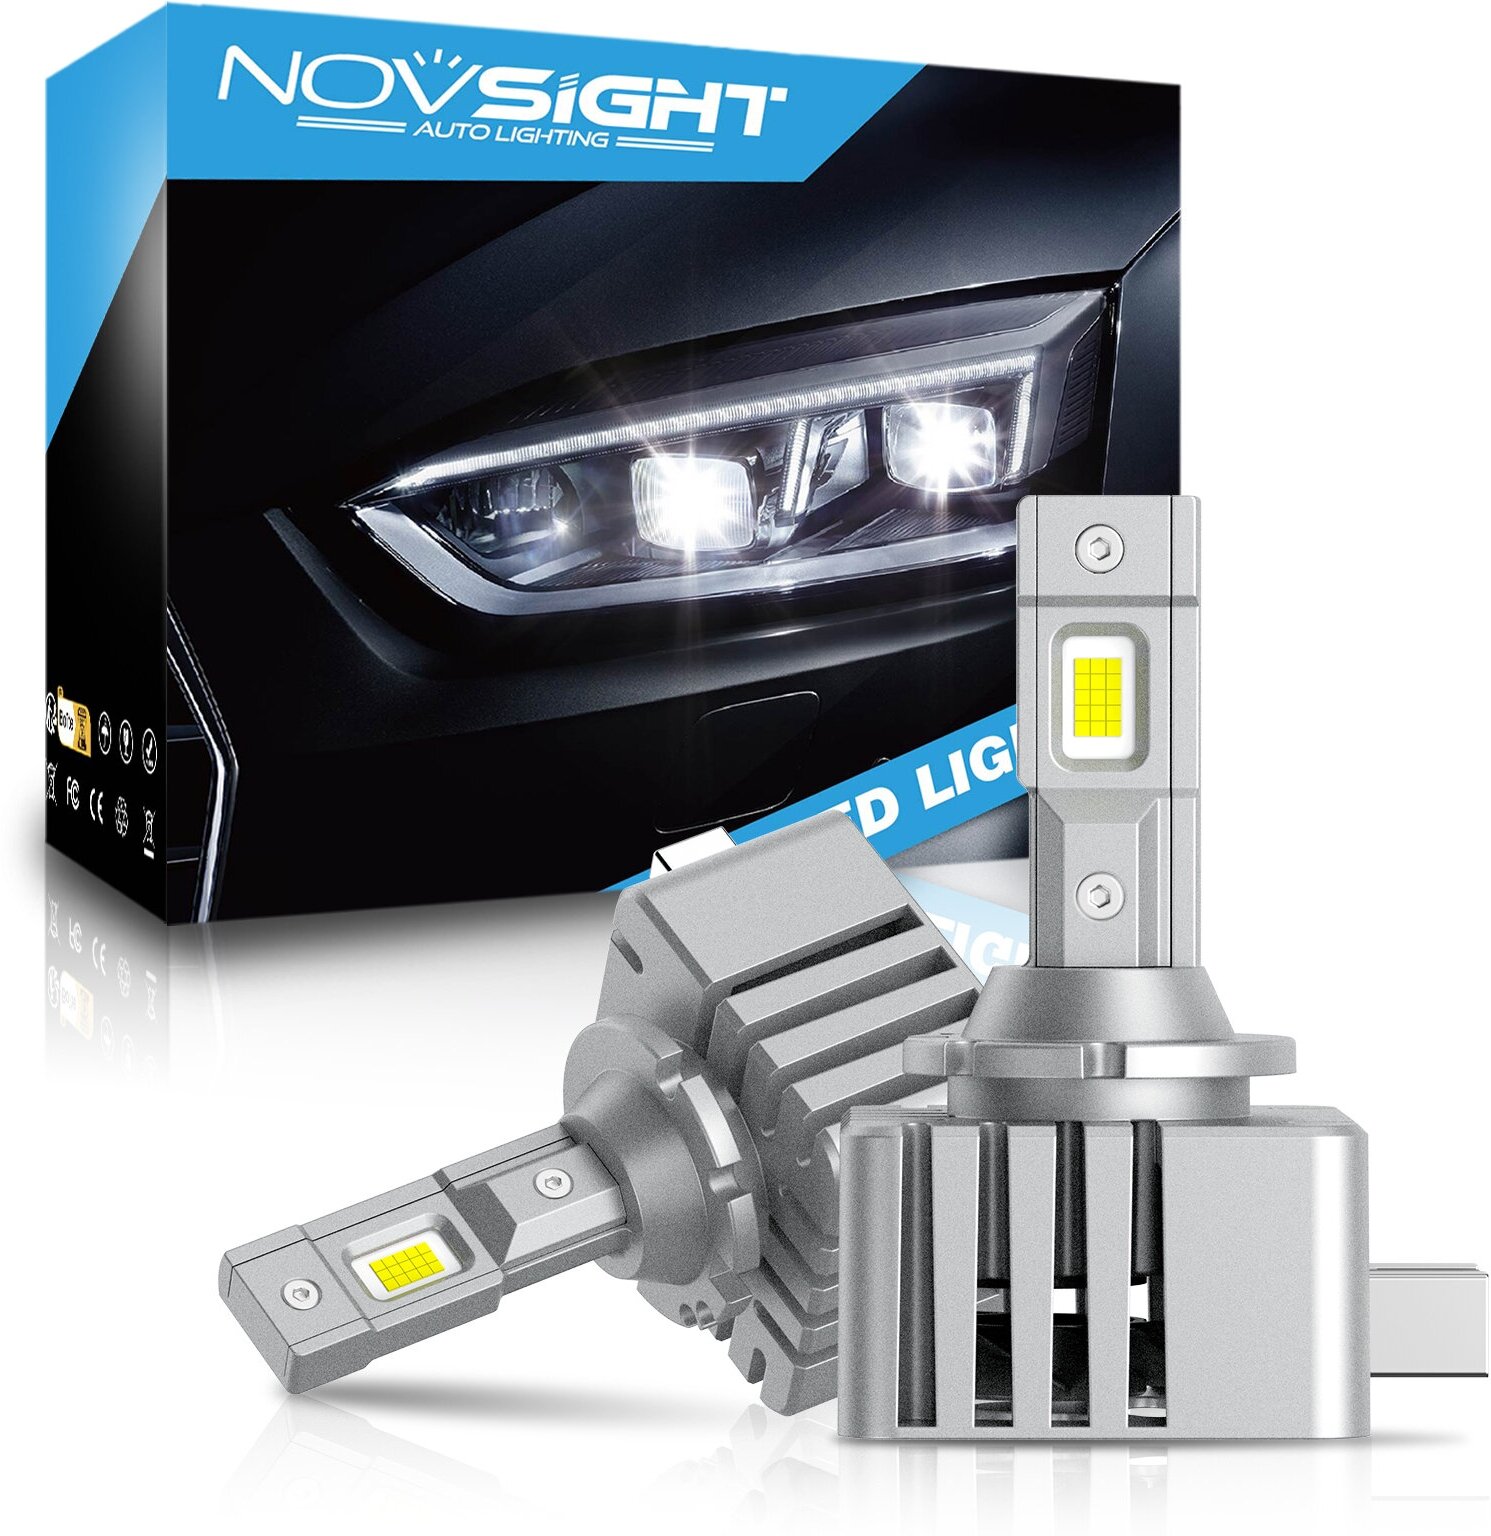 Светодиодная лампа Novsight DH D1 замена ксенона цоколь PK32d-2 PK32d-3 70Вт 2шт 20000Лм 6500К белый свет LED автомобильная